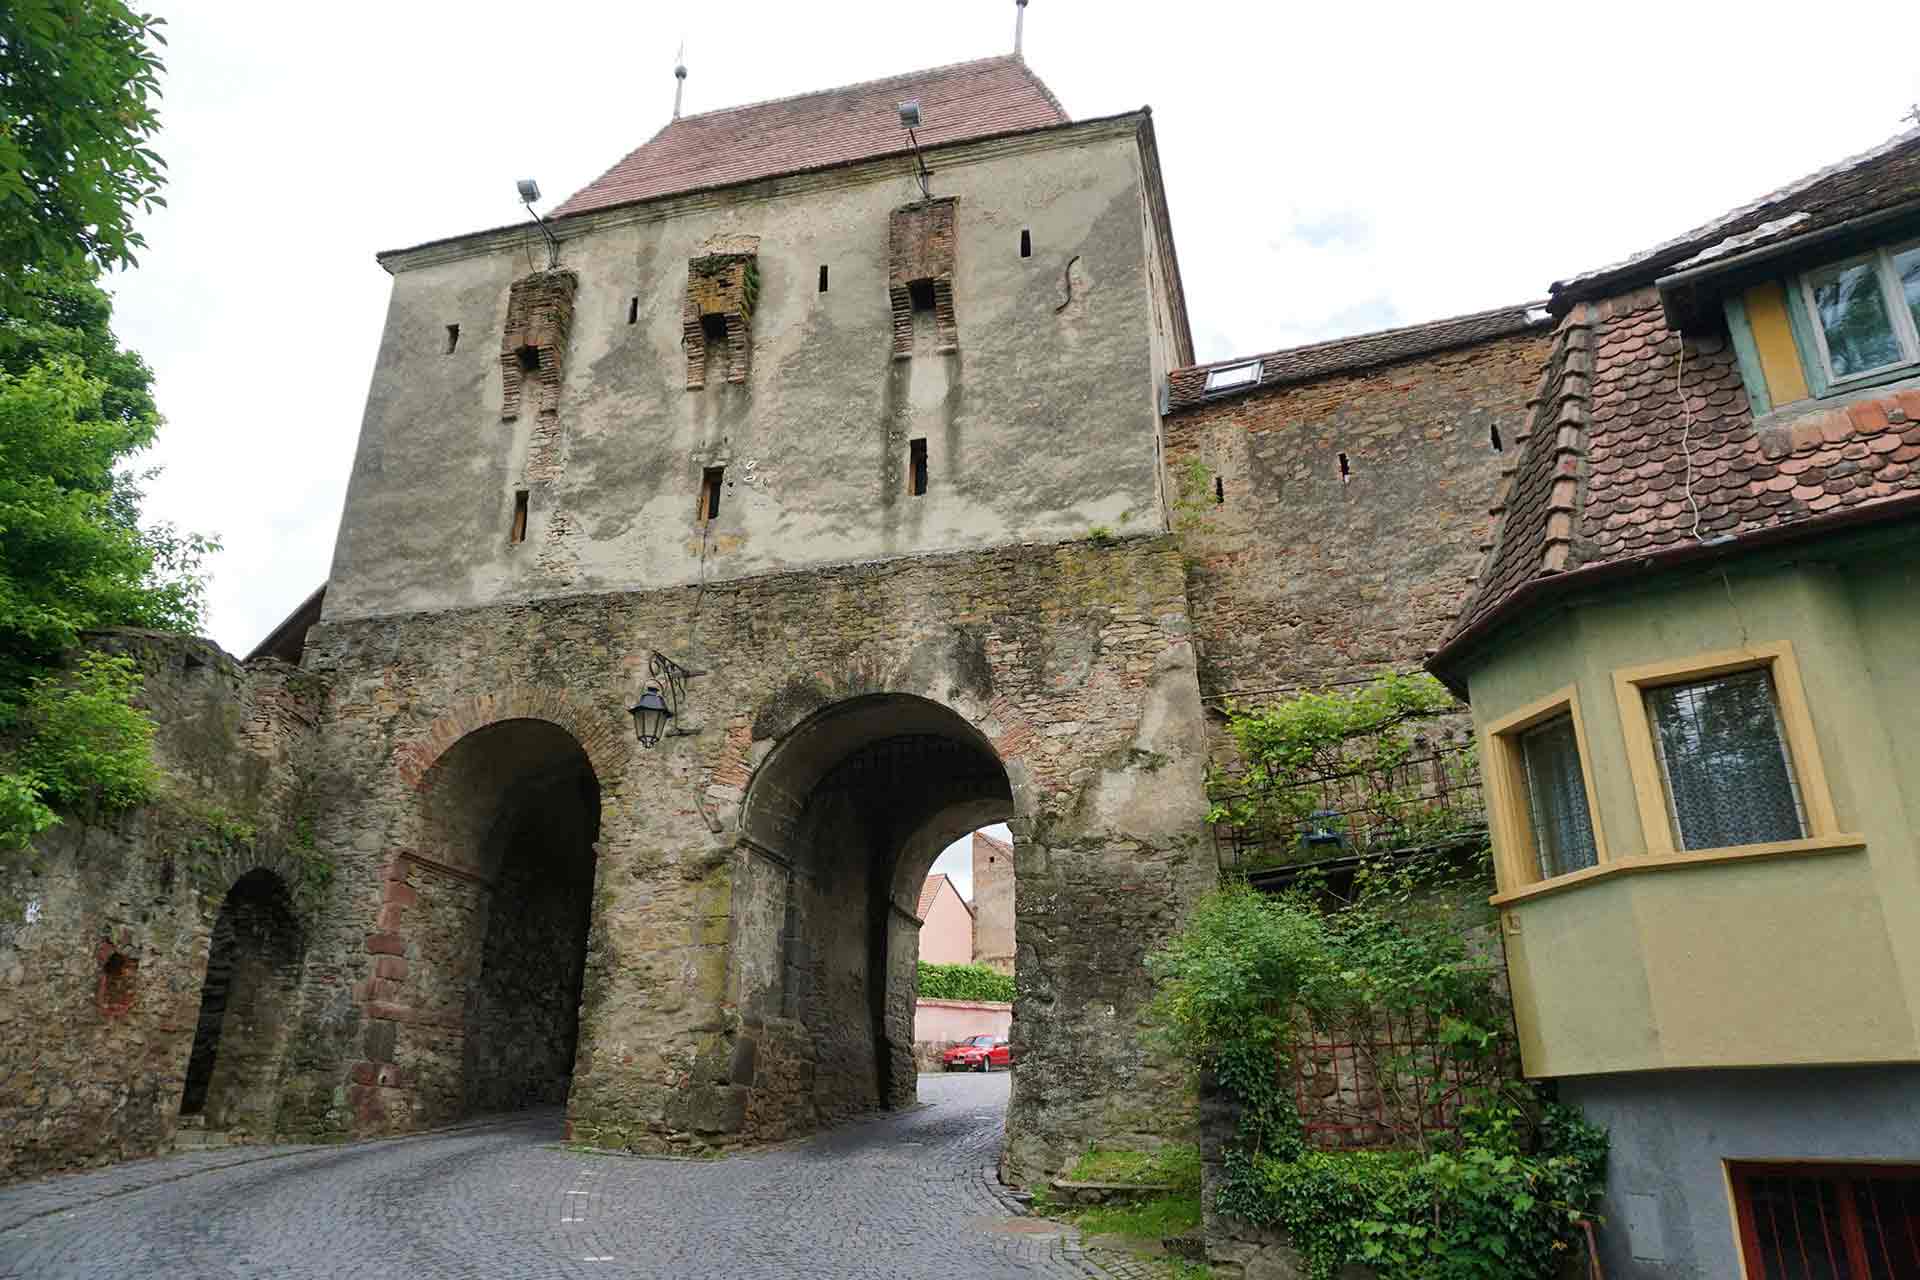 Entering the walled gateway of the citadel of Sighisoara, Transylvania, Romania.